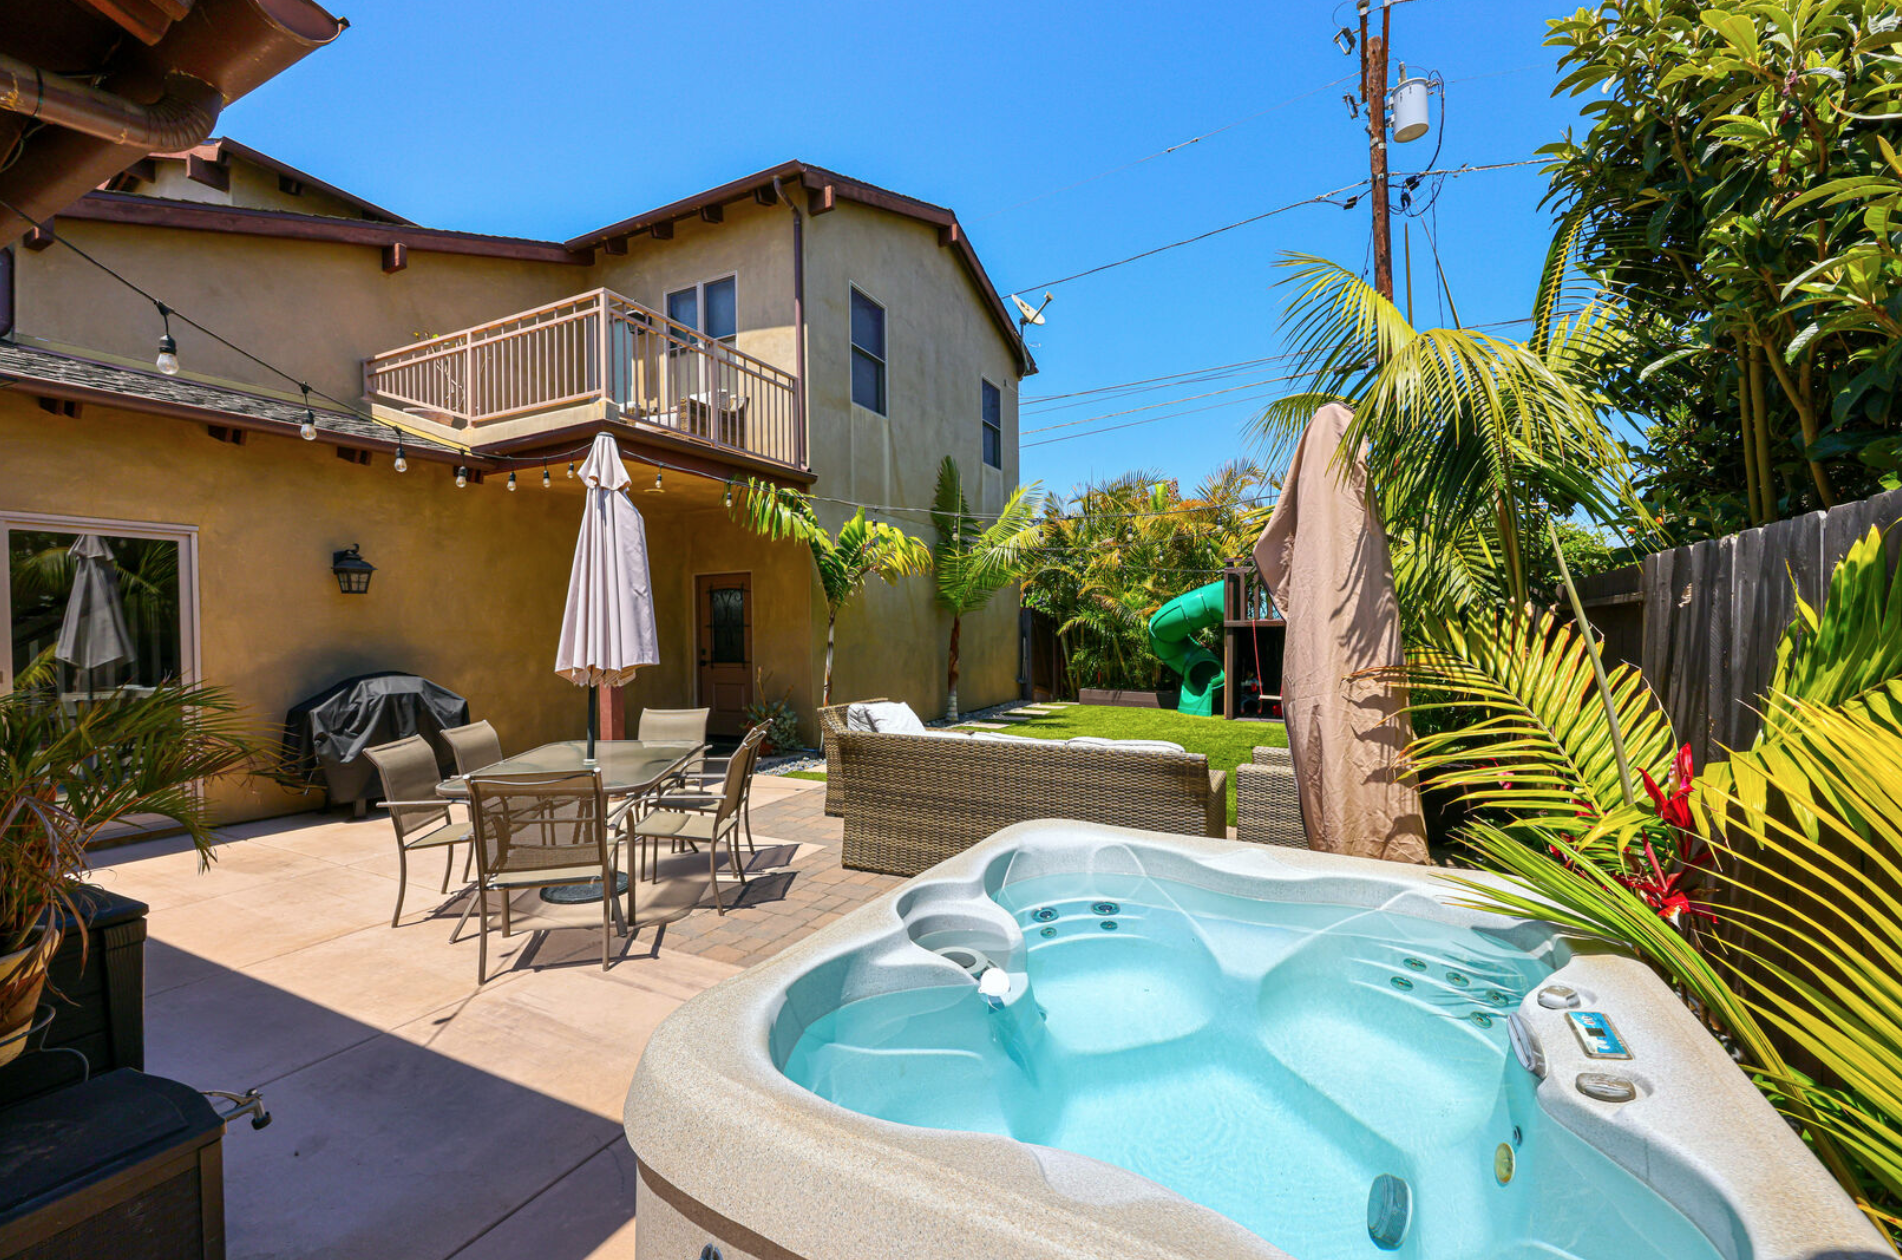 San Diego retreats with a hot tub